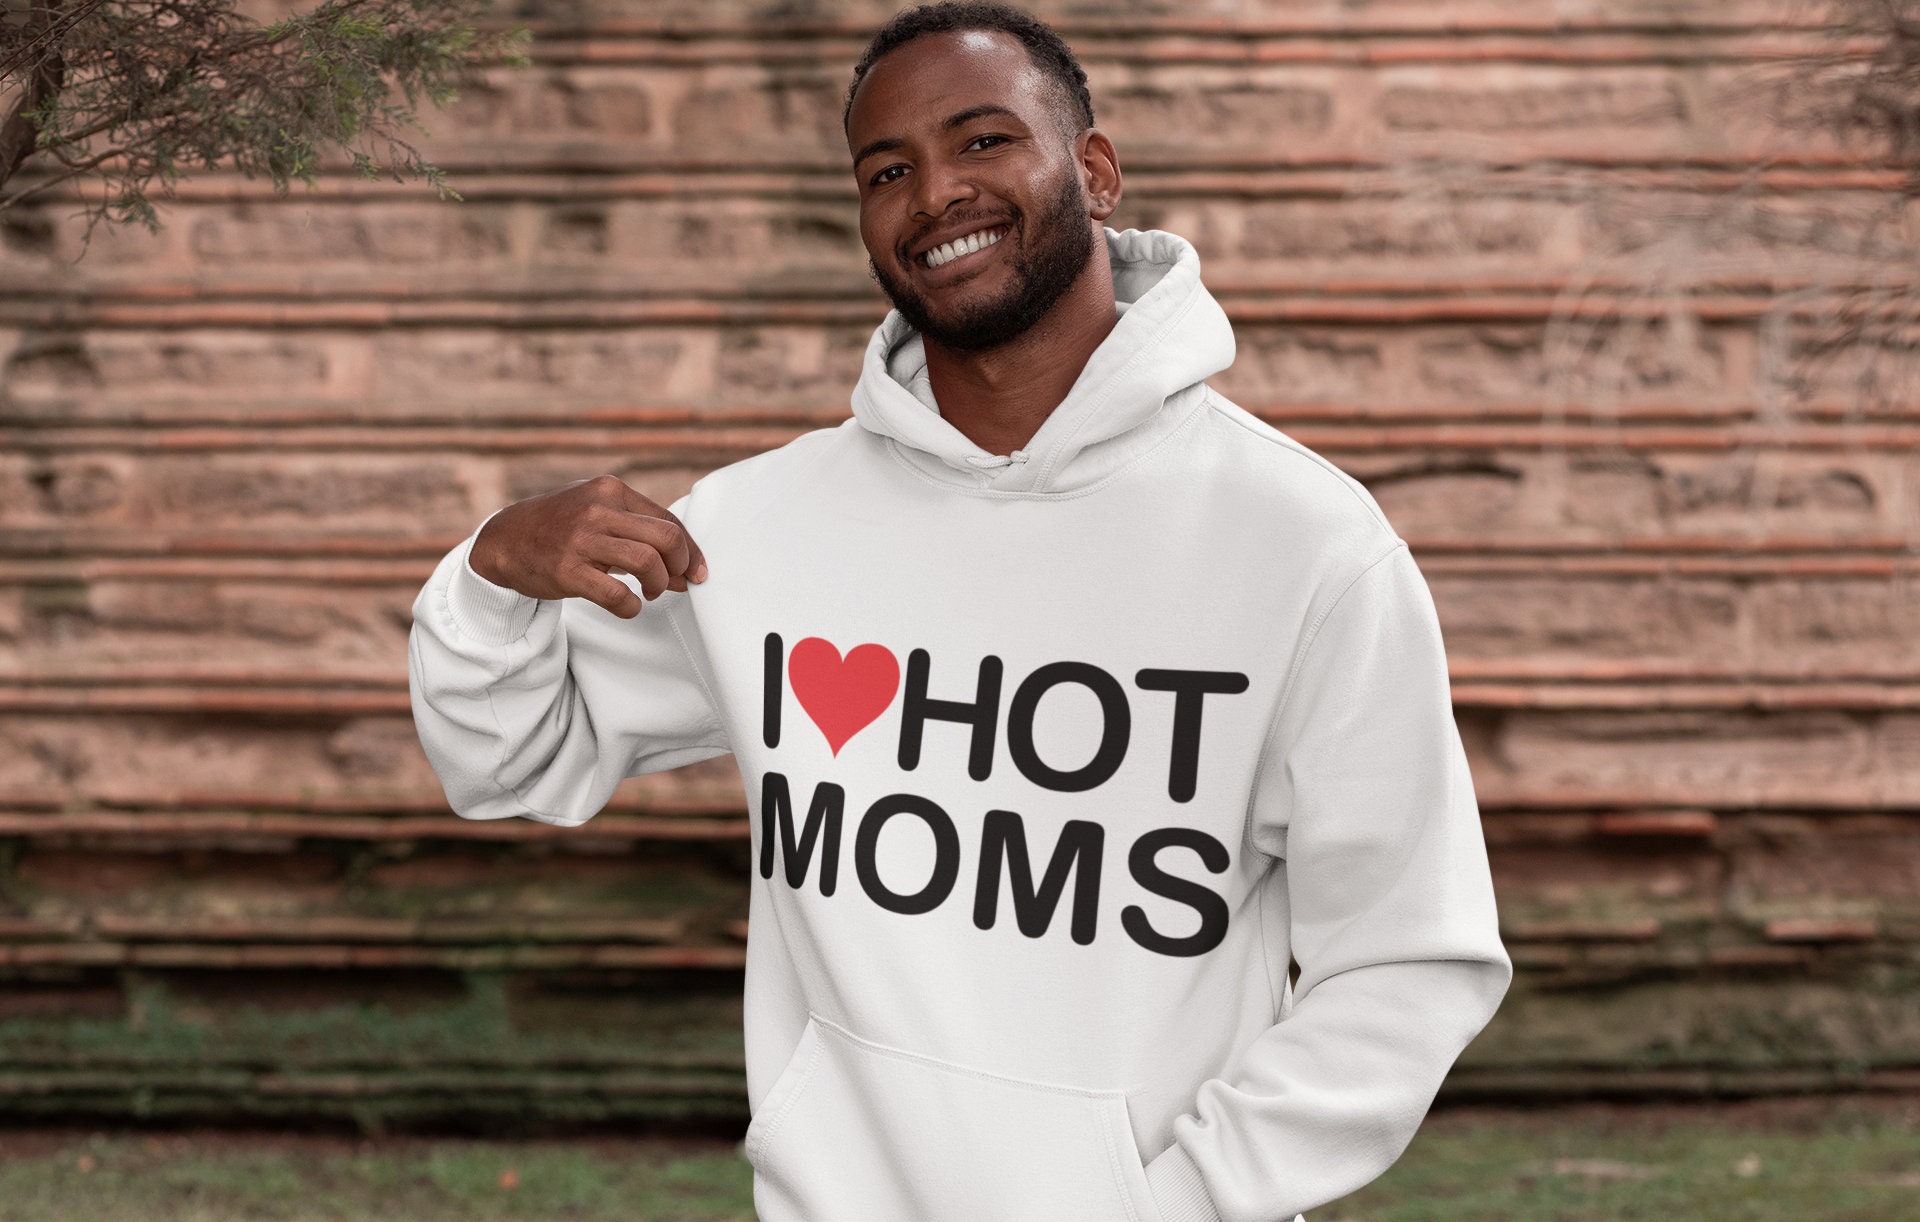 Mom's Favorite Mens Sweatshirts and Hoodies - Louisville, Adult Unisex, Size: 3XL, Blue